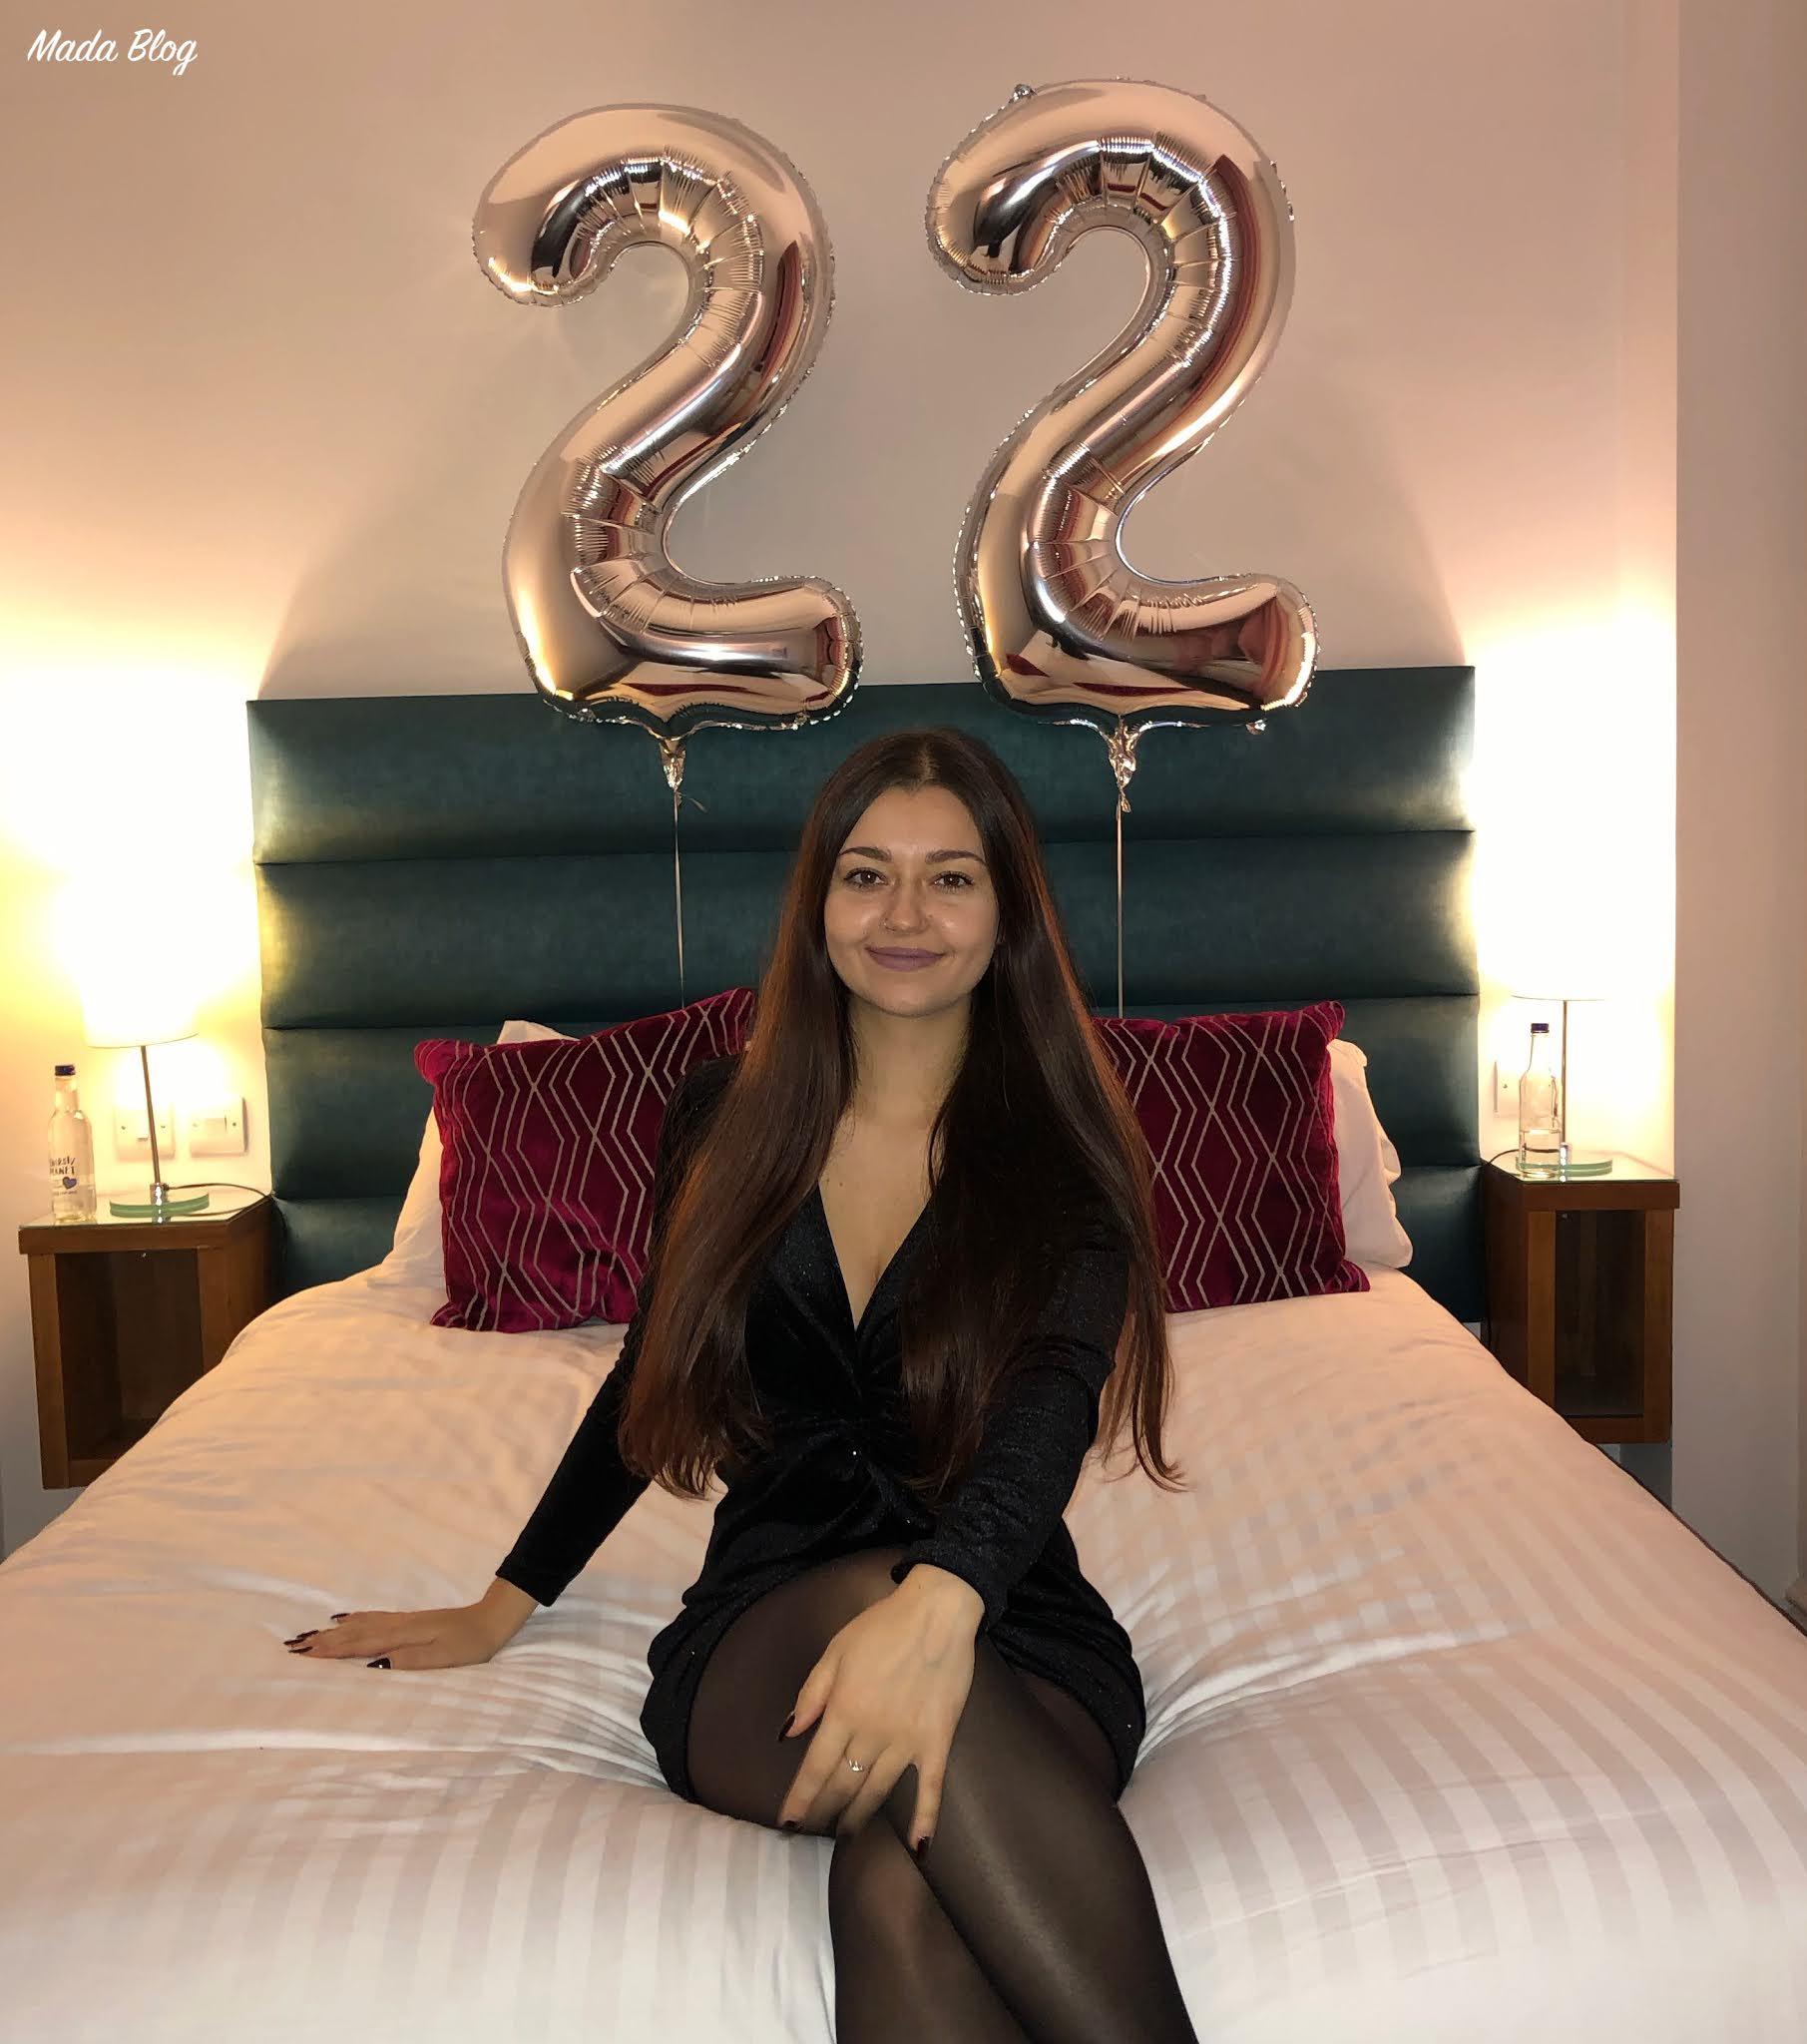 Mada-Blog: I'm 22!